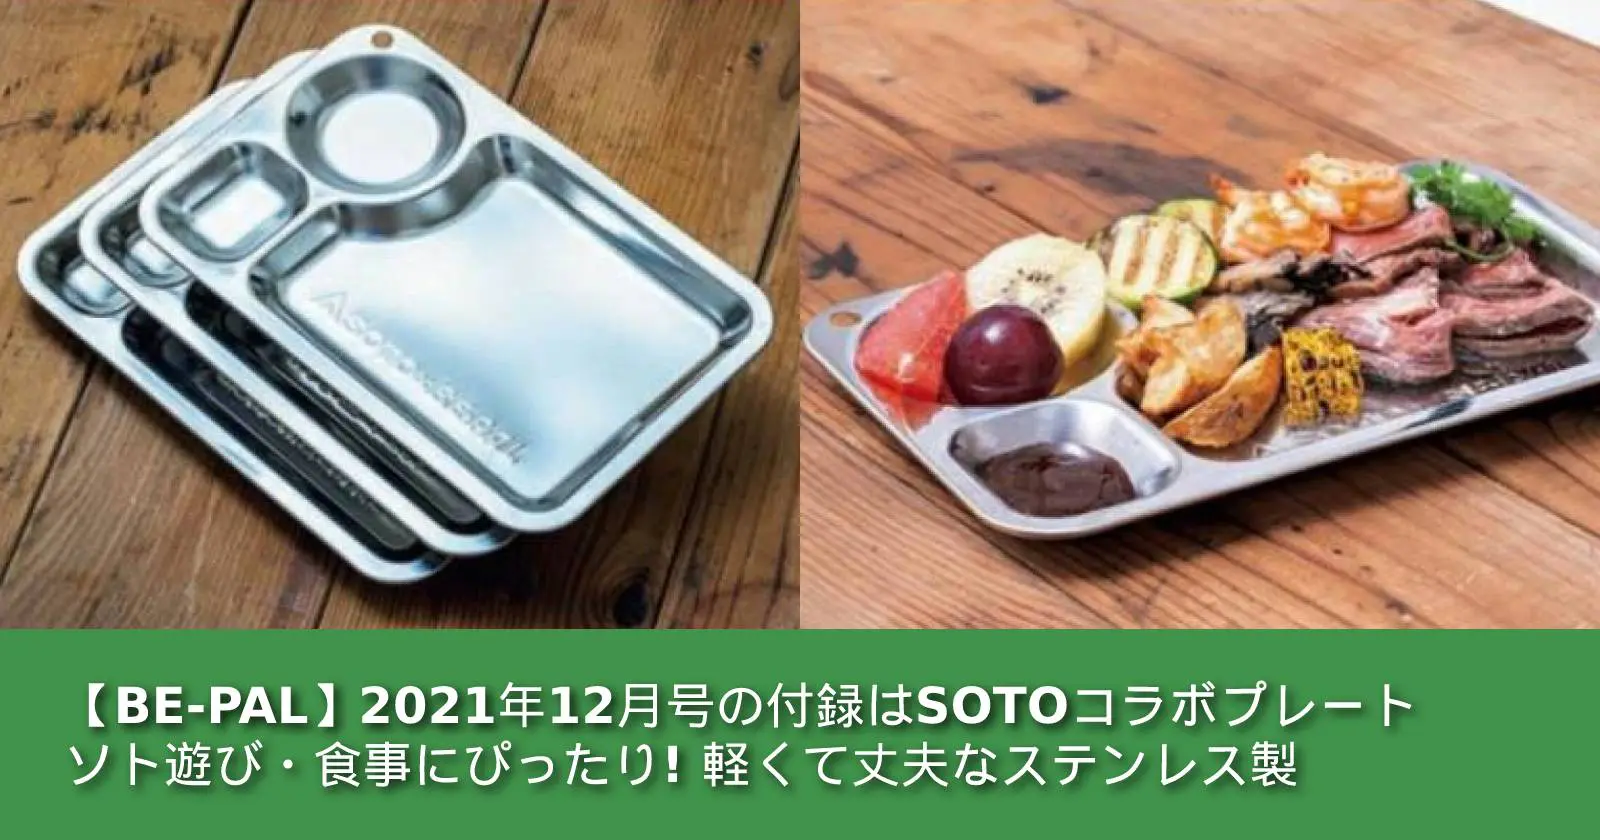 SOTO × BE-PAL ステンレスランチプレート - バーベキュー・調理用品